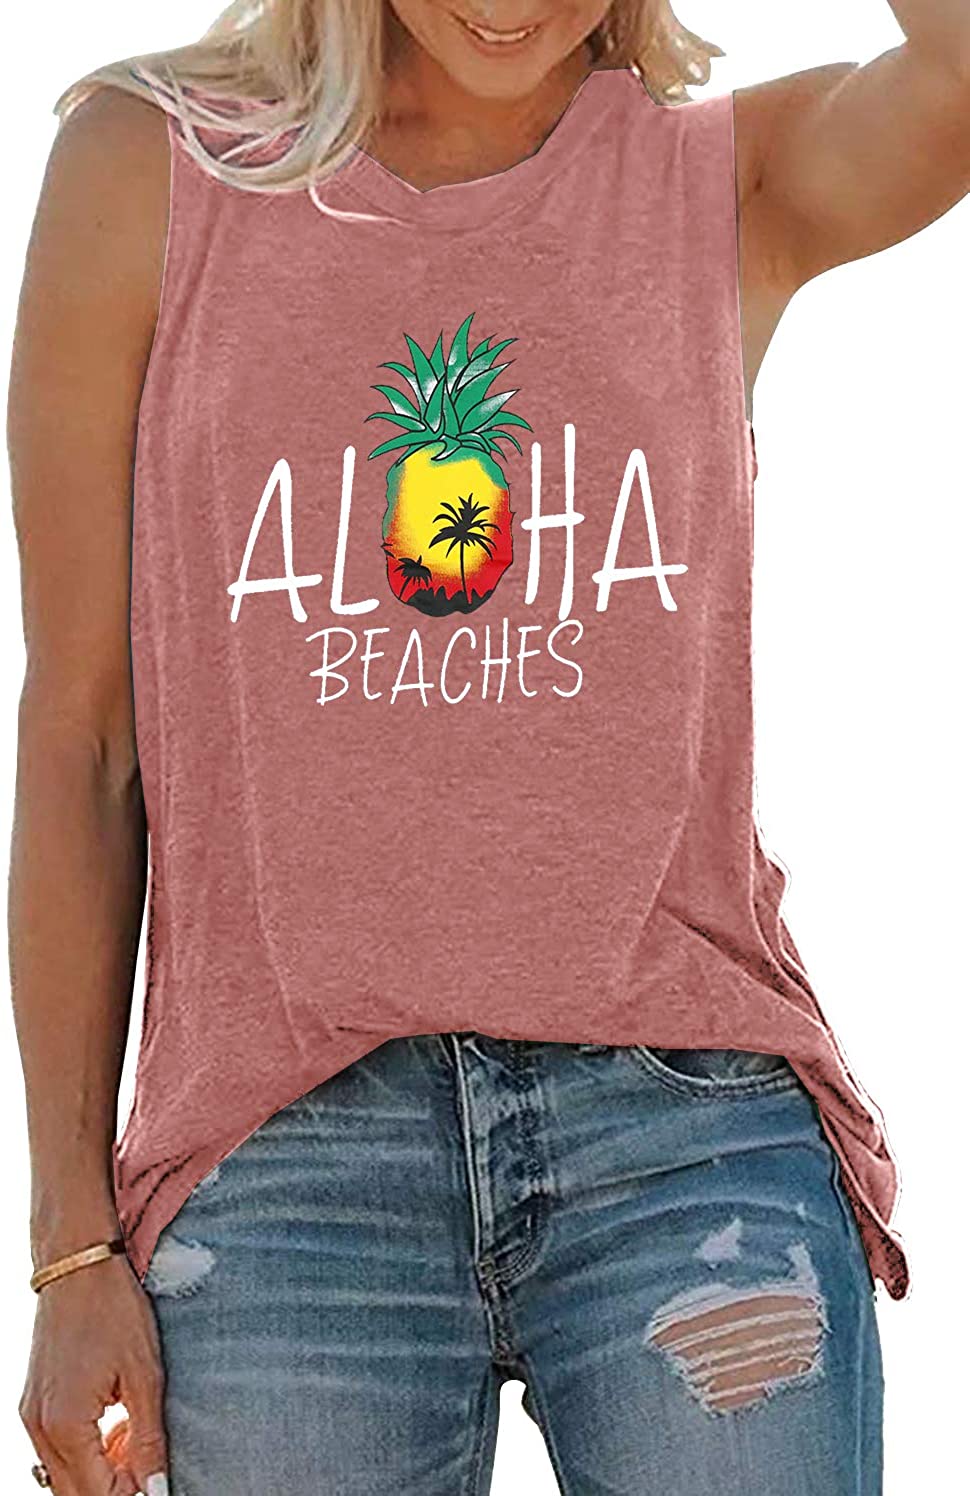 Aloha Beaches Letter Tank Top Women Pineapple Print Sleeveless T Shirt Cute  Vest | eBay